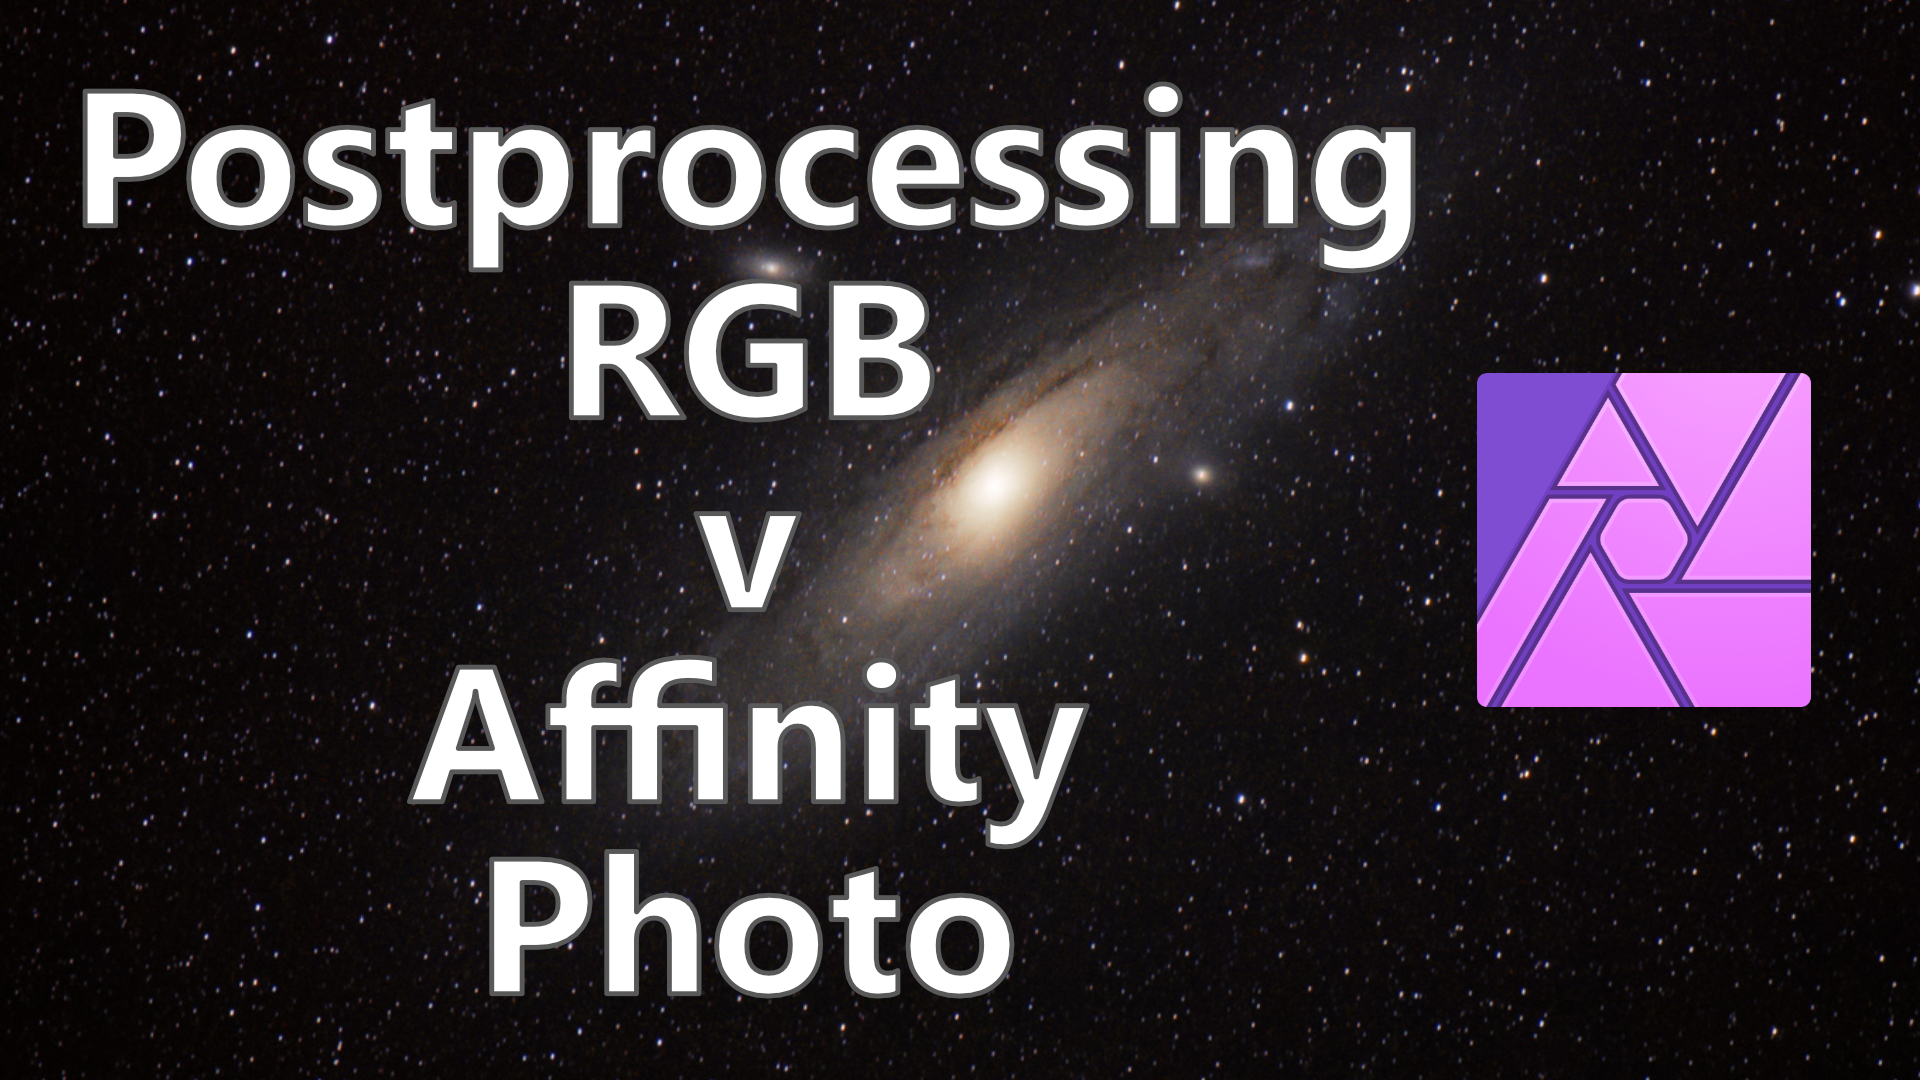 Astrofoto postprocessing v Affinity Photo - Natural colors